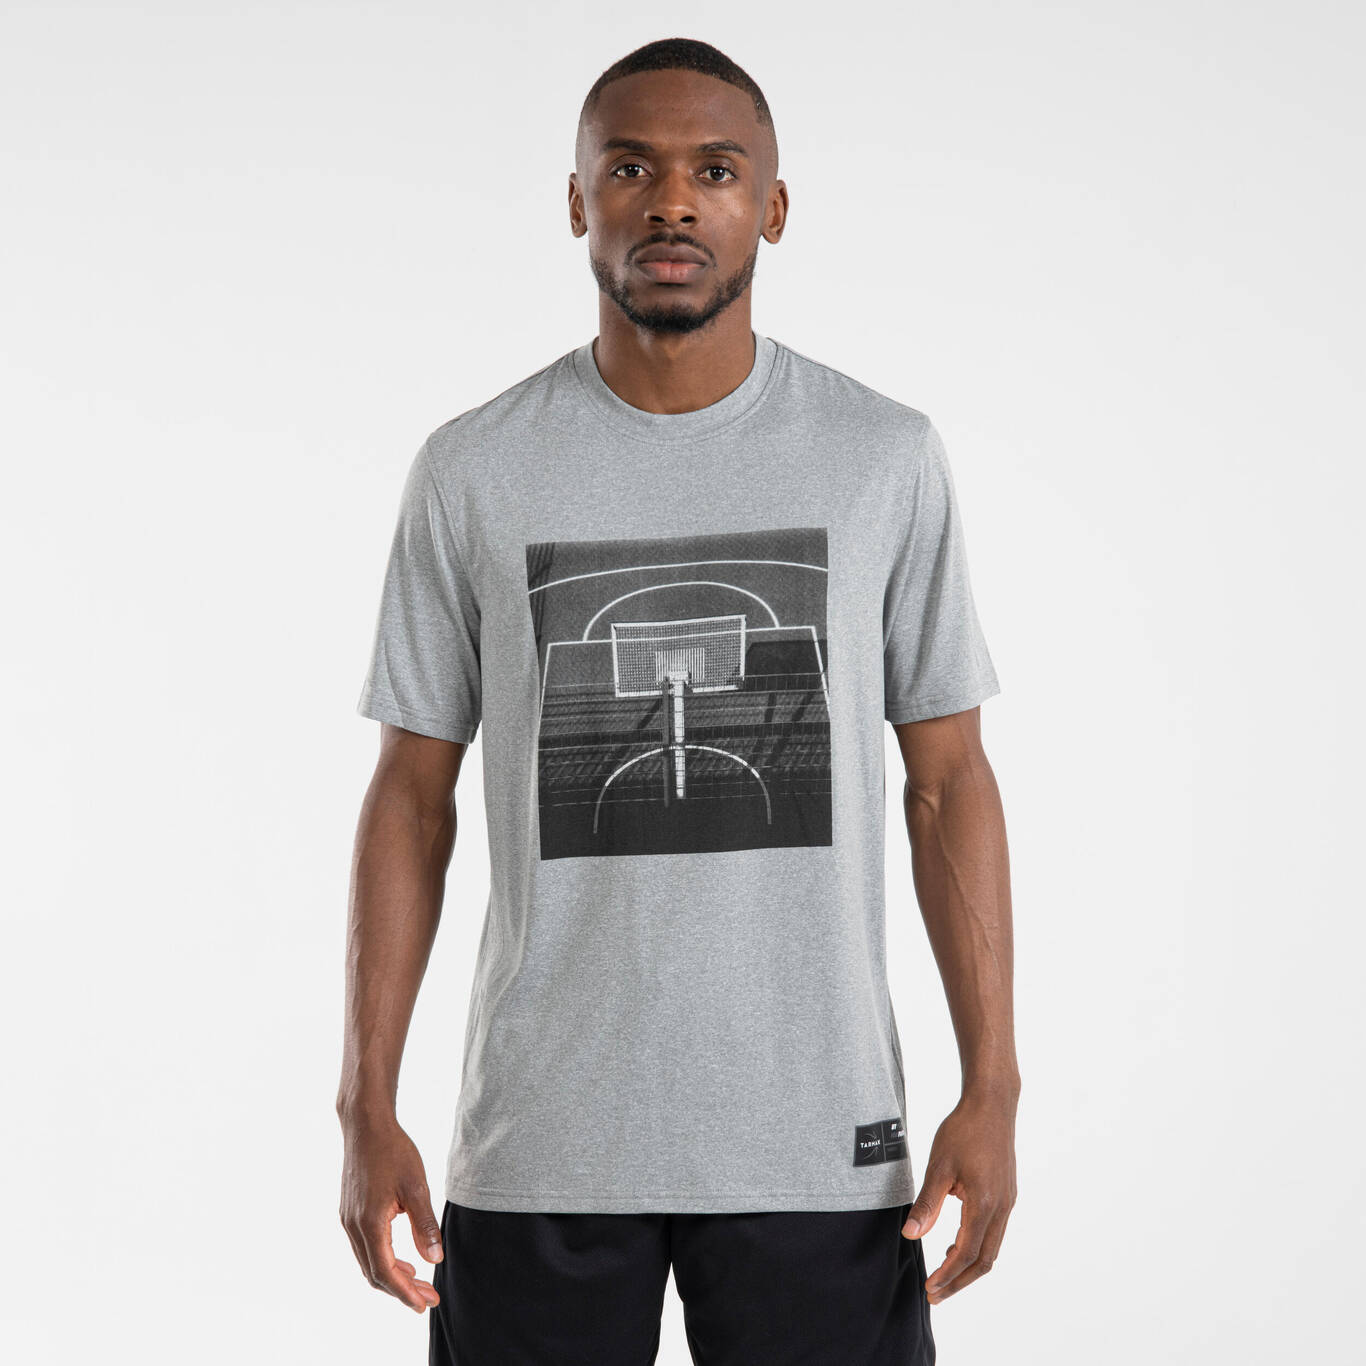 Men's Basketball T-Shirt TS500 Fast - Grey Photo Board